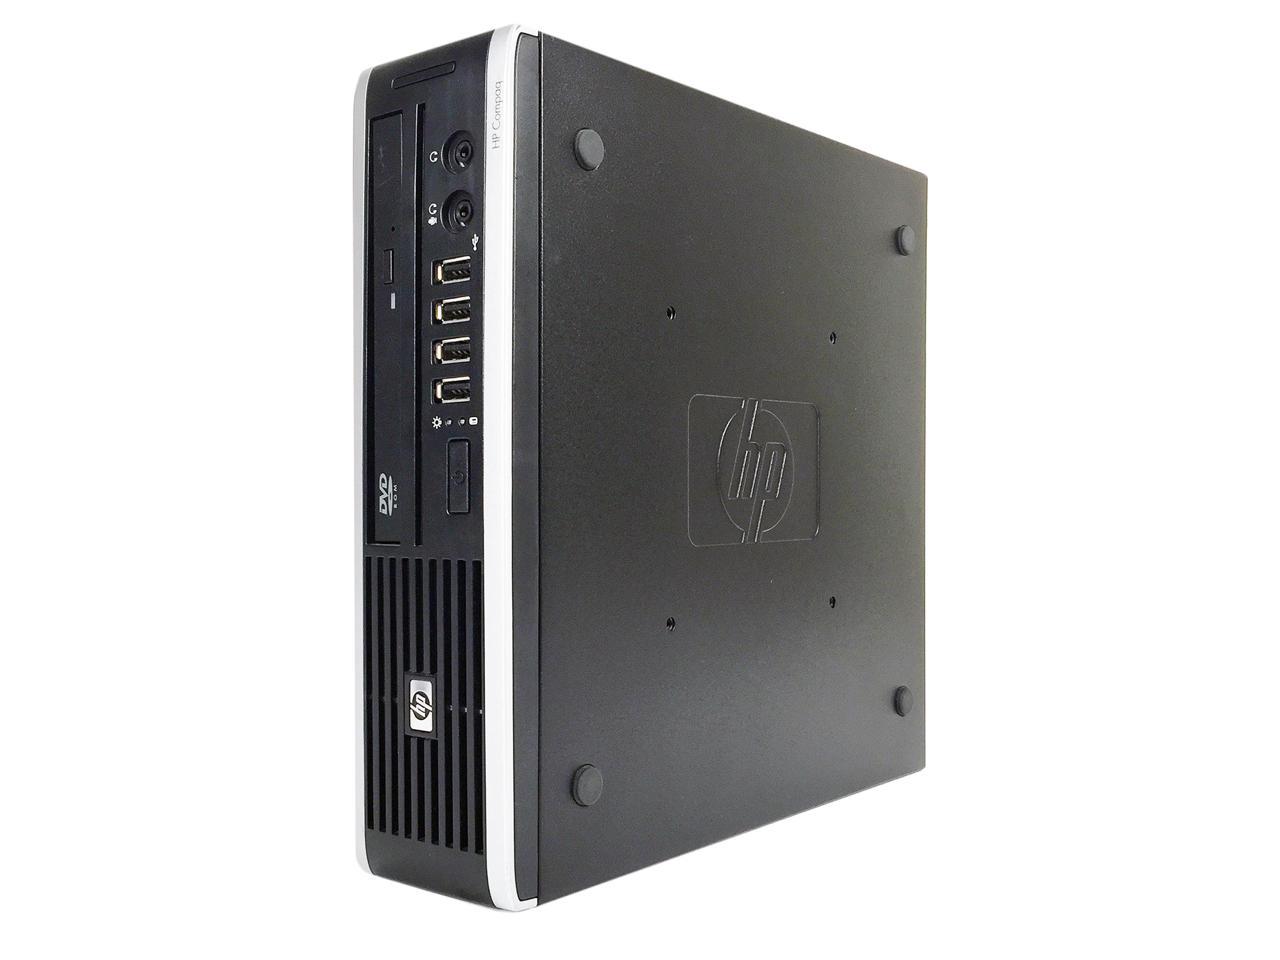 Refurbished HP Grade A Compaq 8200 Elite Ultra-slim PC Intel Core i5 2400S (2.5 GHz), 4 GB DDR3, 240GB SSD, WIFI, Bluetooth 4.0, DVD, Win 7 Pro 64-bit, 1 Year Warranty